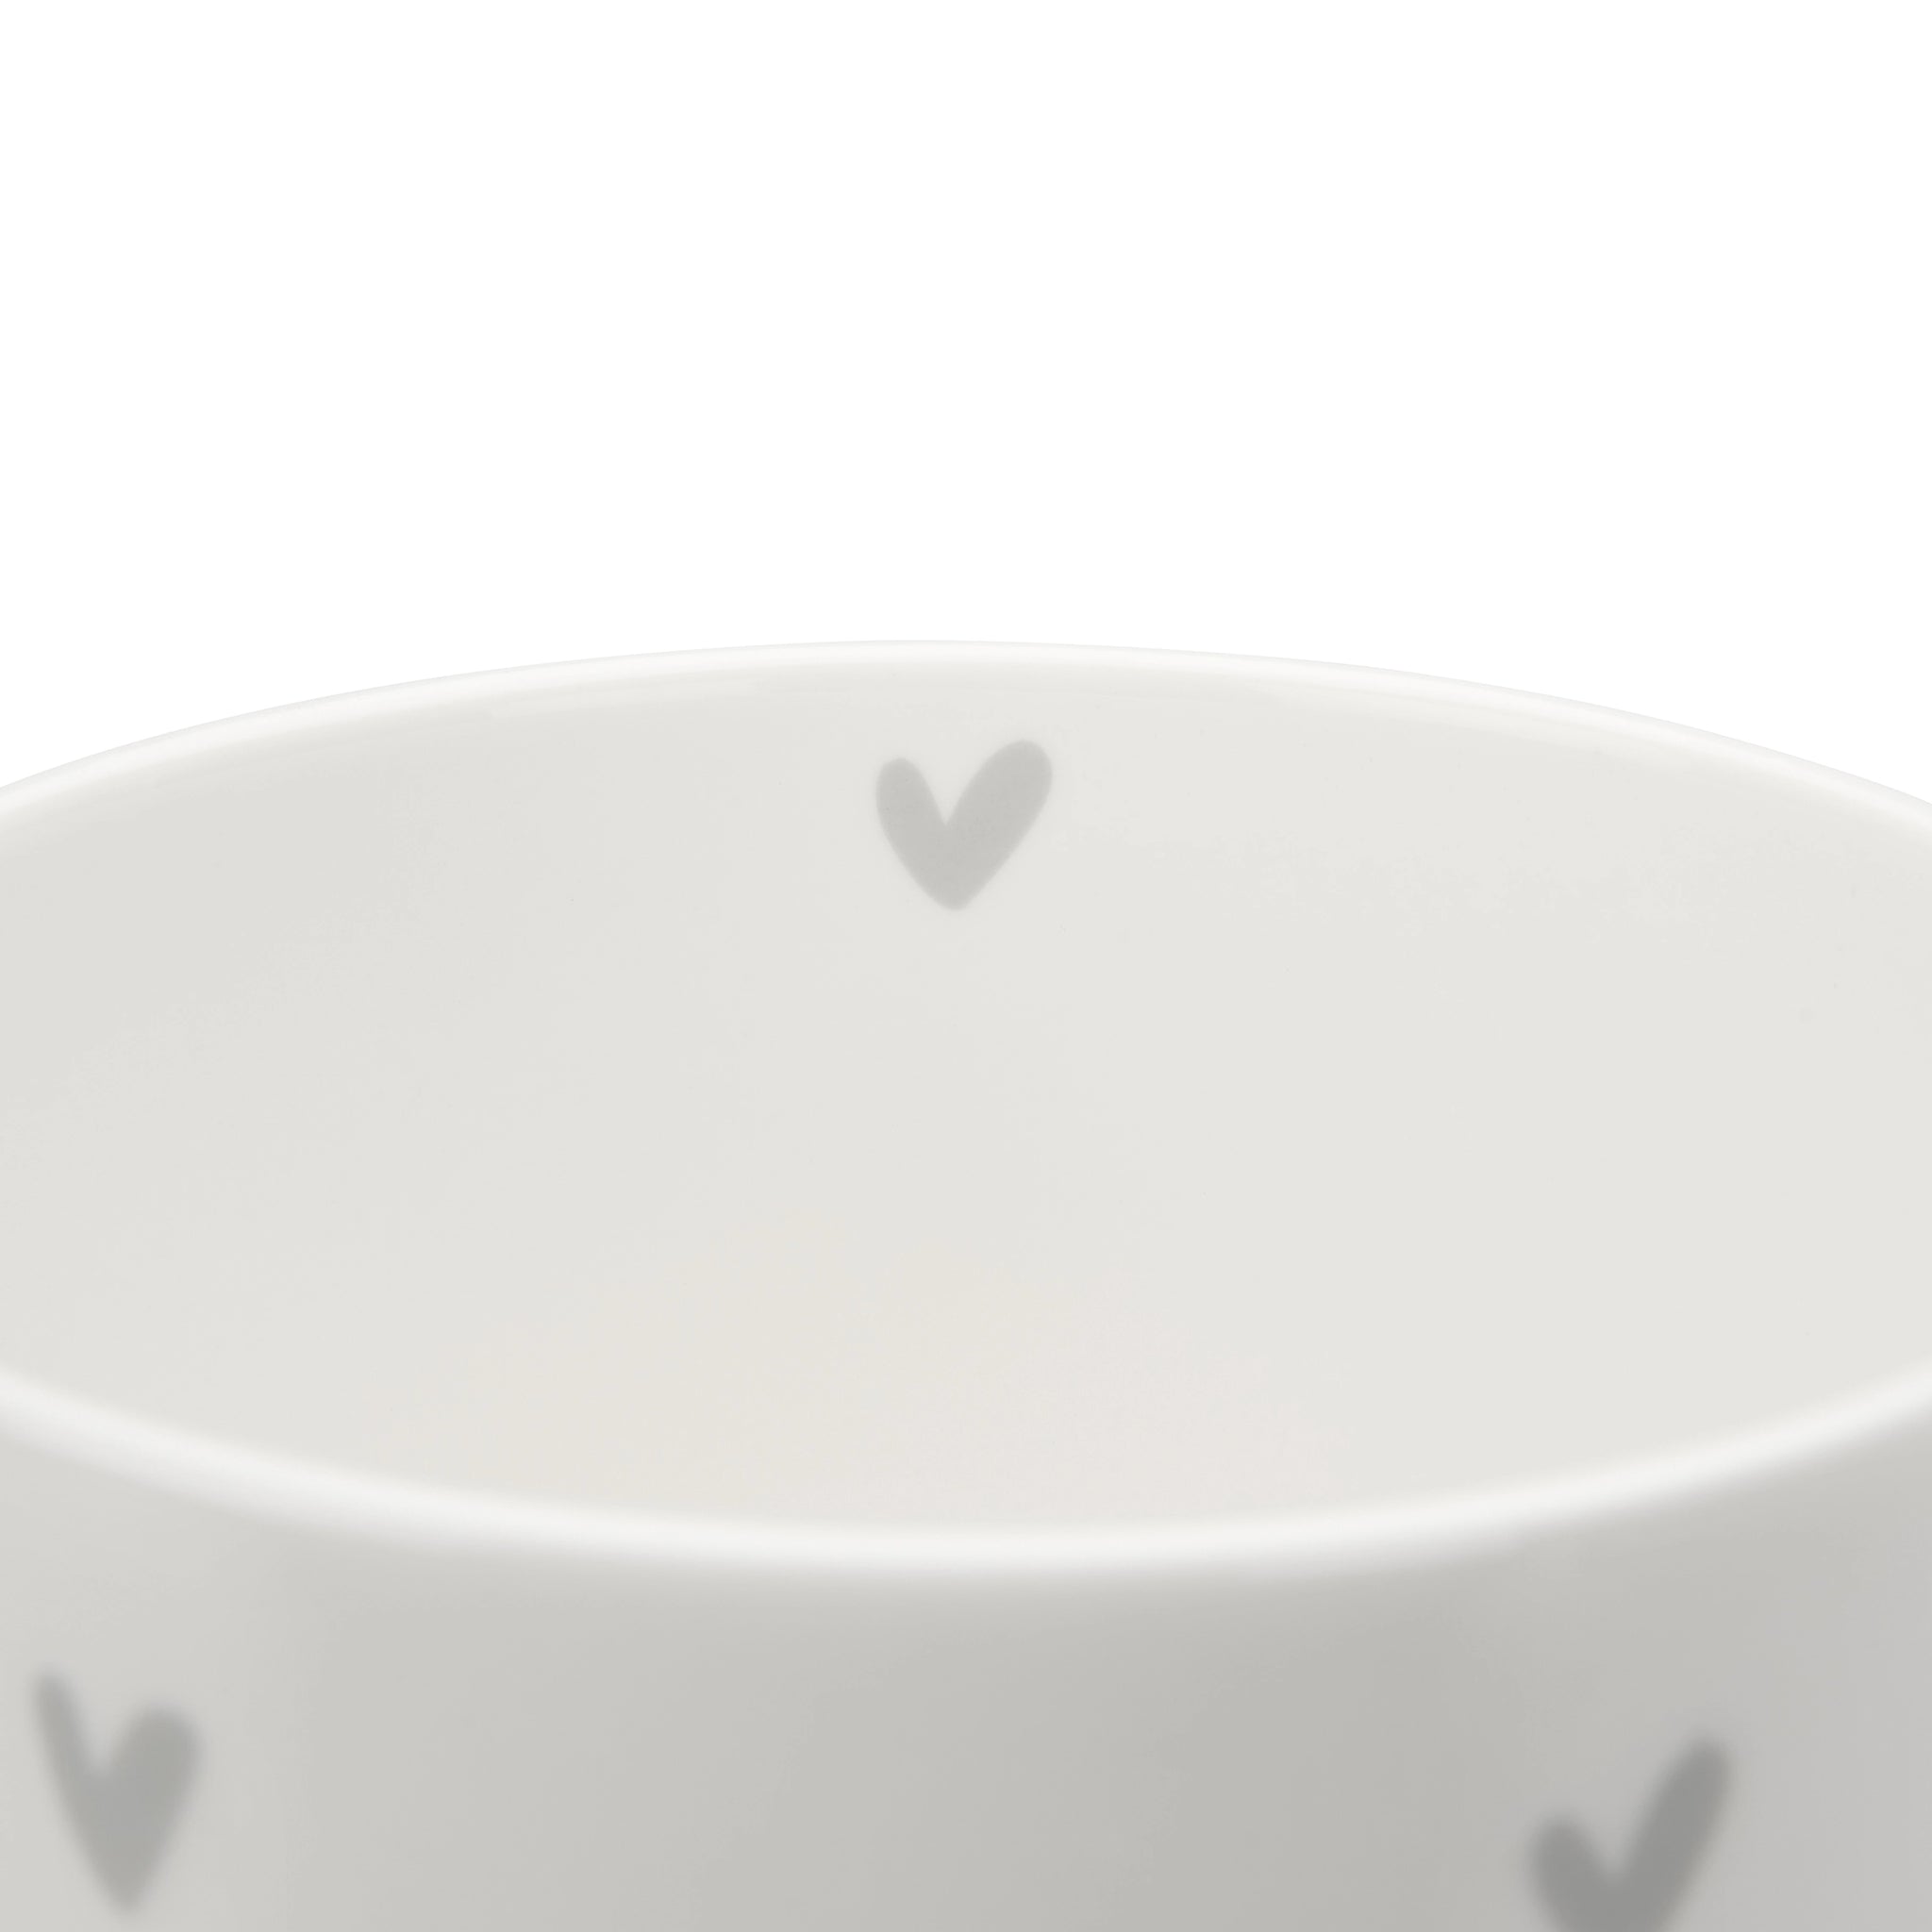 Hearts Grey Mug